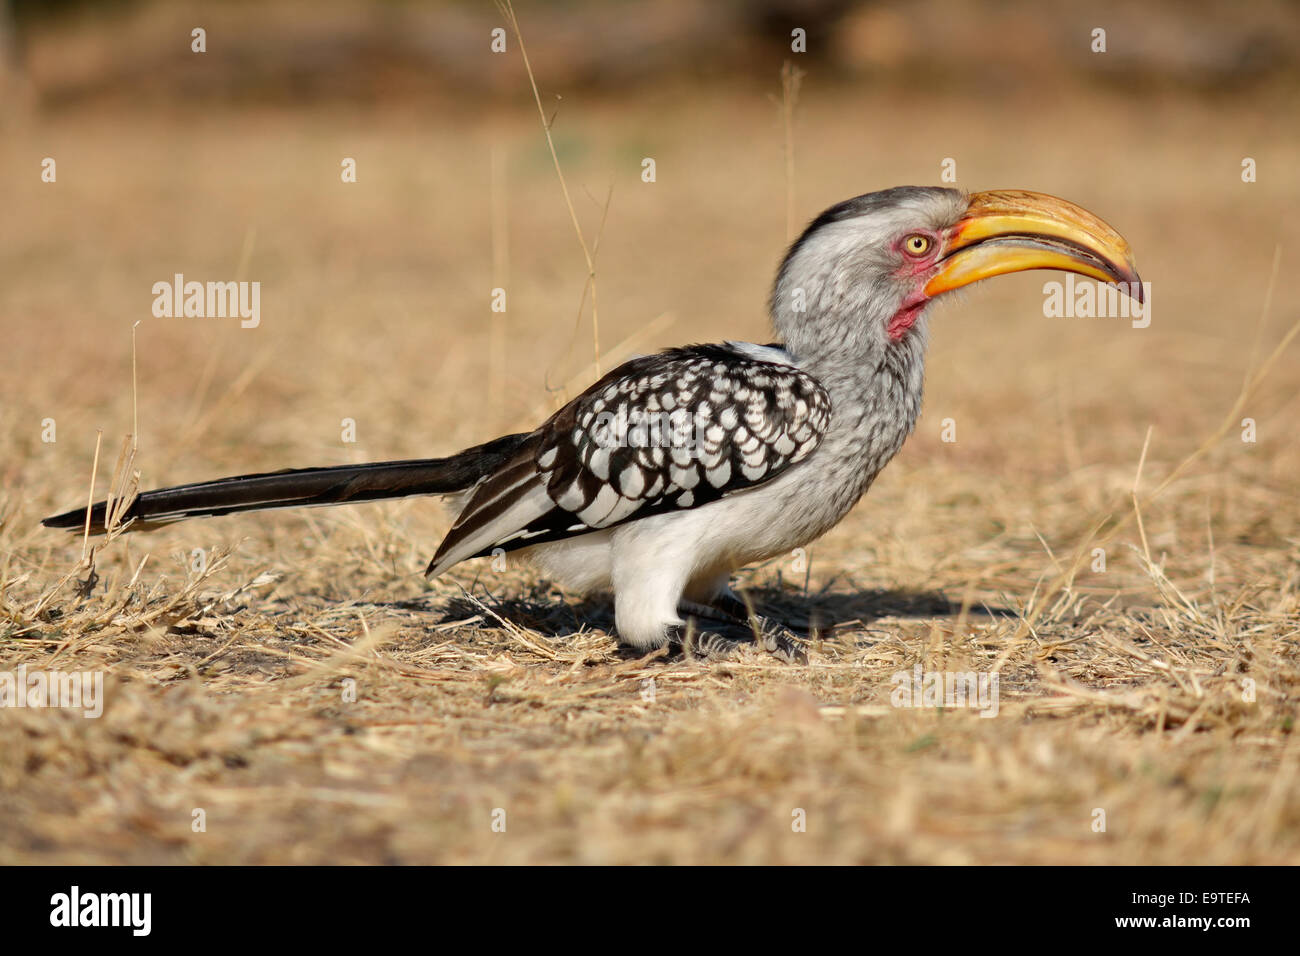 Yellow-billed hornbill (Tockus flavirostris) sitting on the ground, South Africa Stock Photo